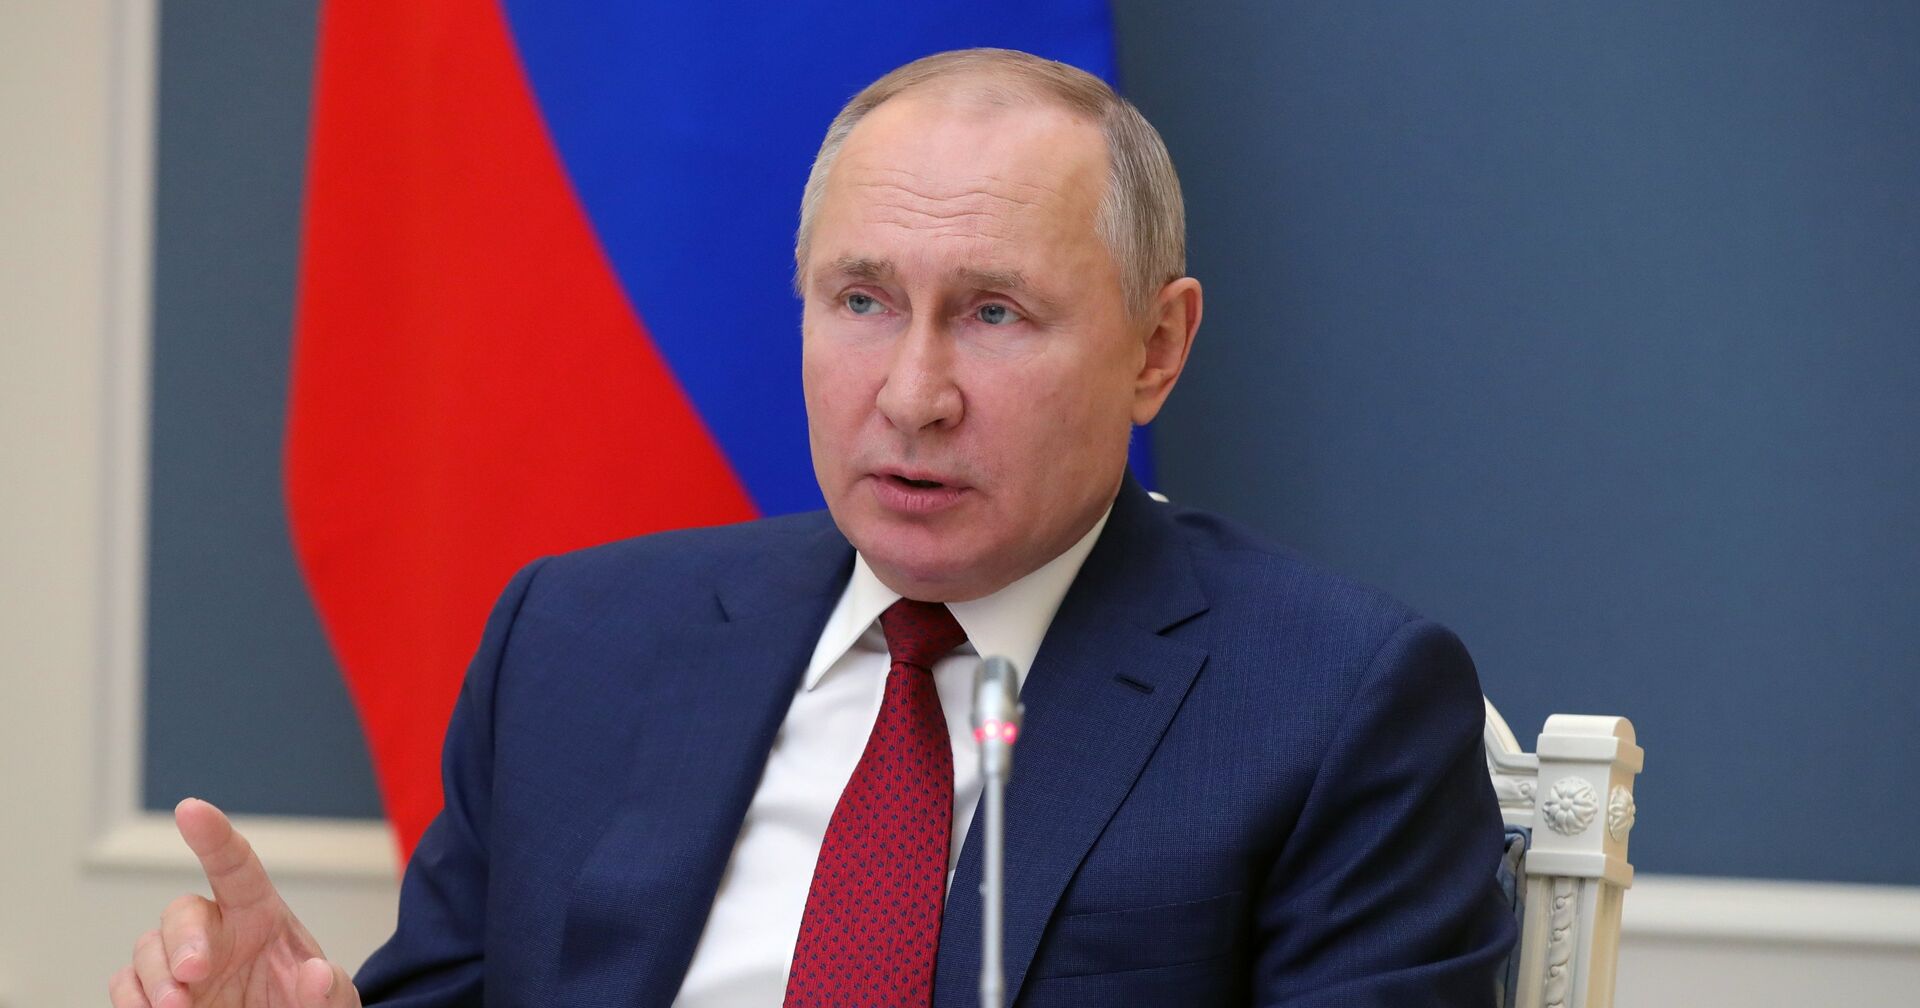 Президент РФ В. Путин выступил на сессии онлайн-форума Давосская повестка дня 2021 - ИноСМИ, 1920, 19.03.2021